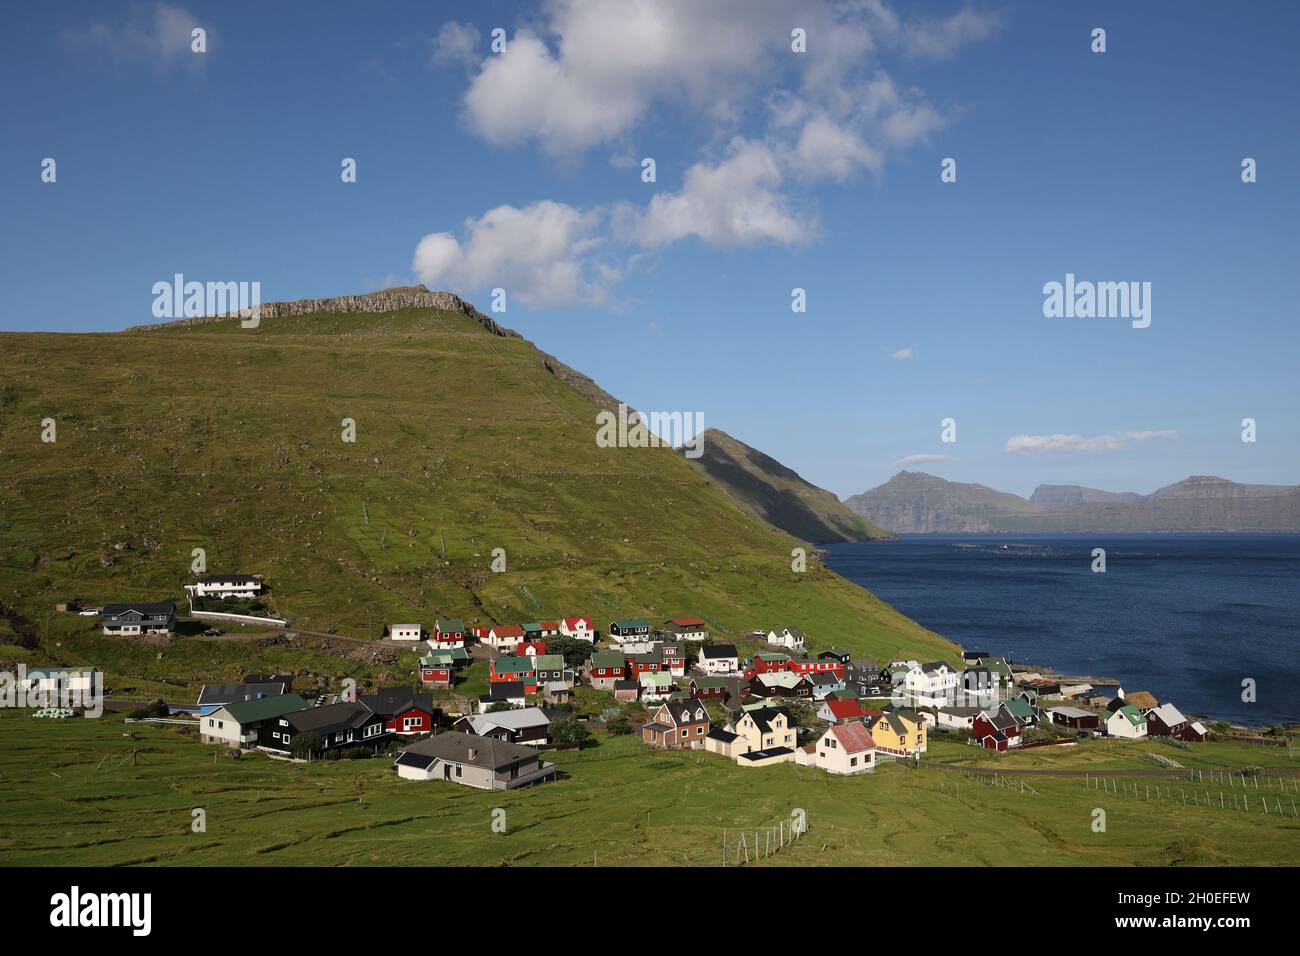 High angle view of Funningur, Eysturoy Island, Faroe Islands,Scandinavia, Europe. Stock Photo